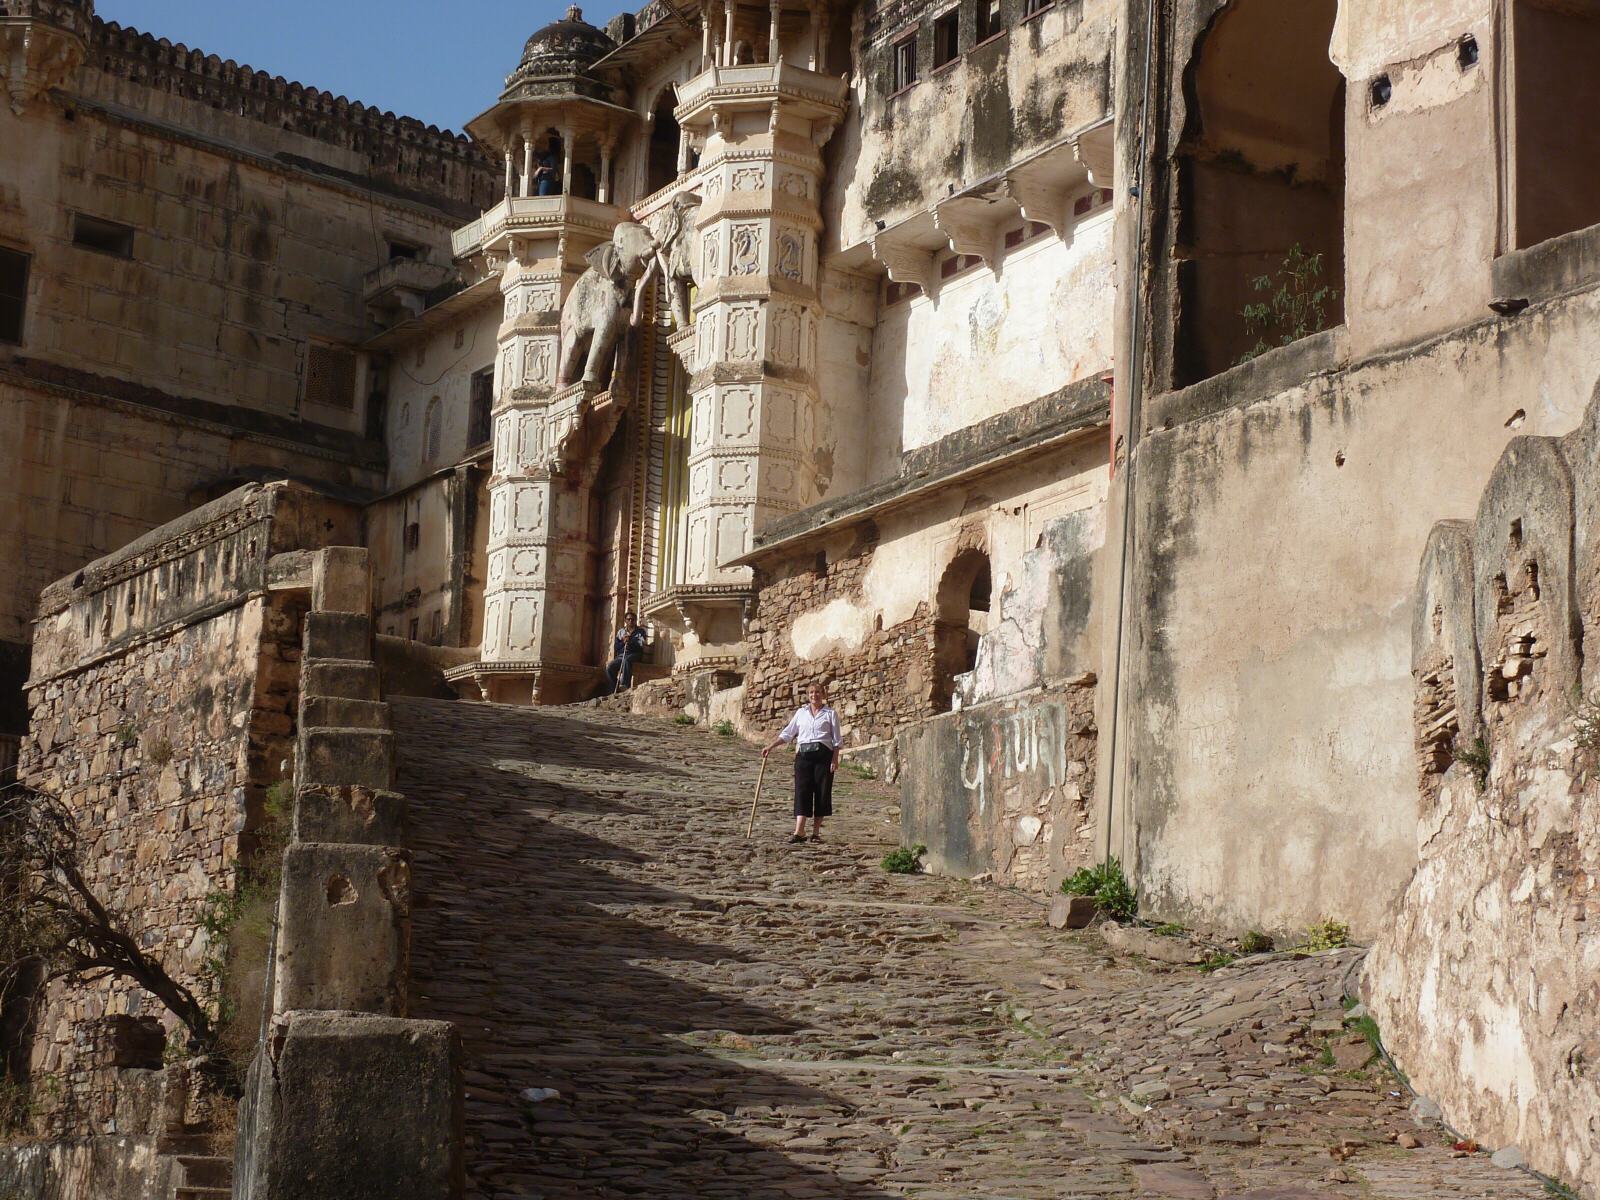 Entrance to the Palace in Bundi, Rajasthan, India